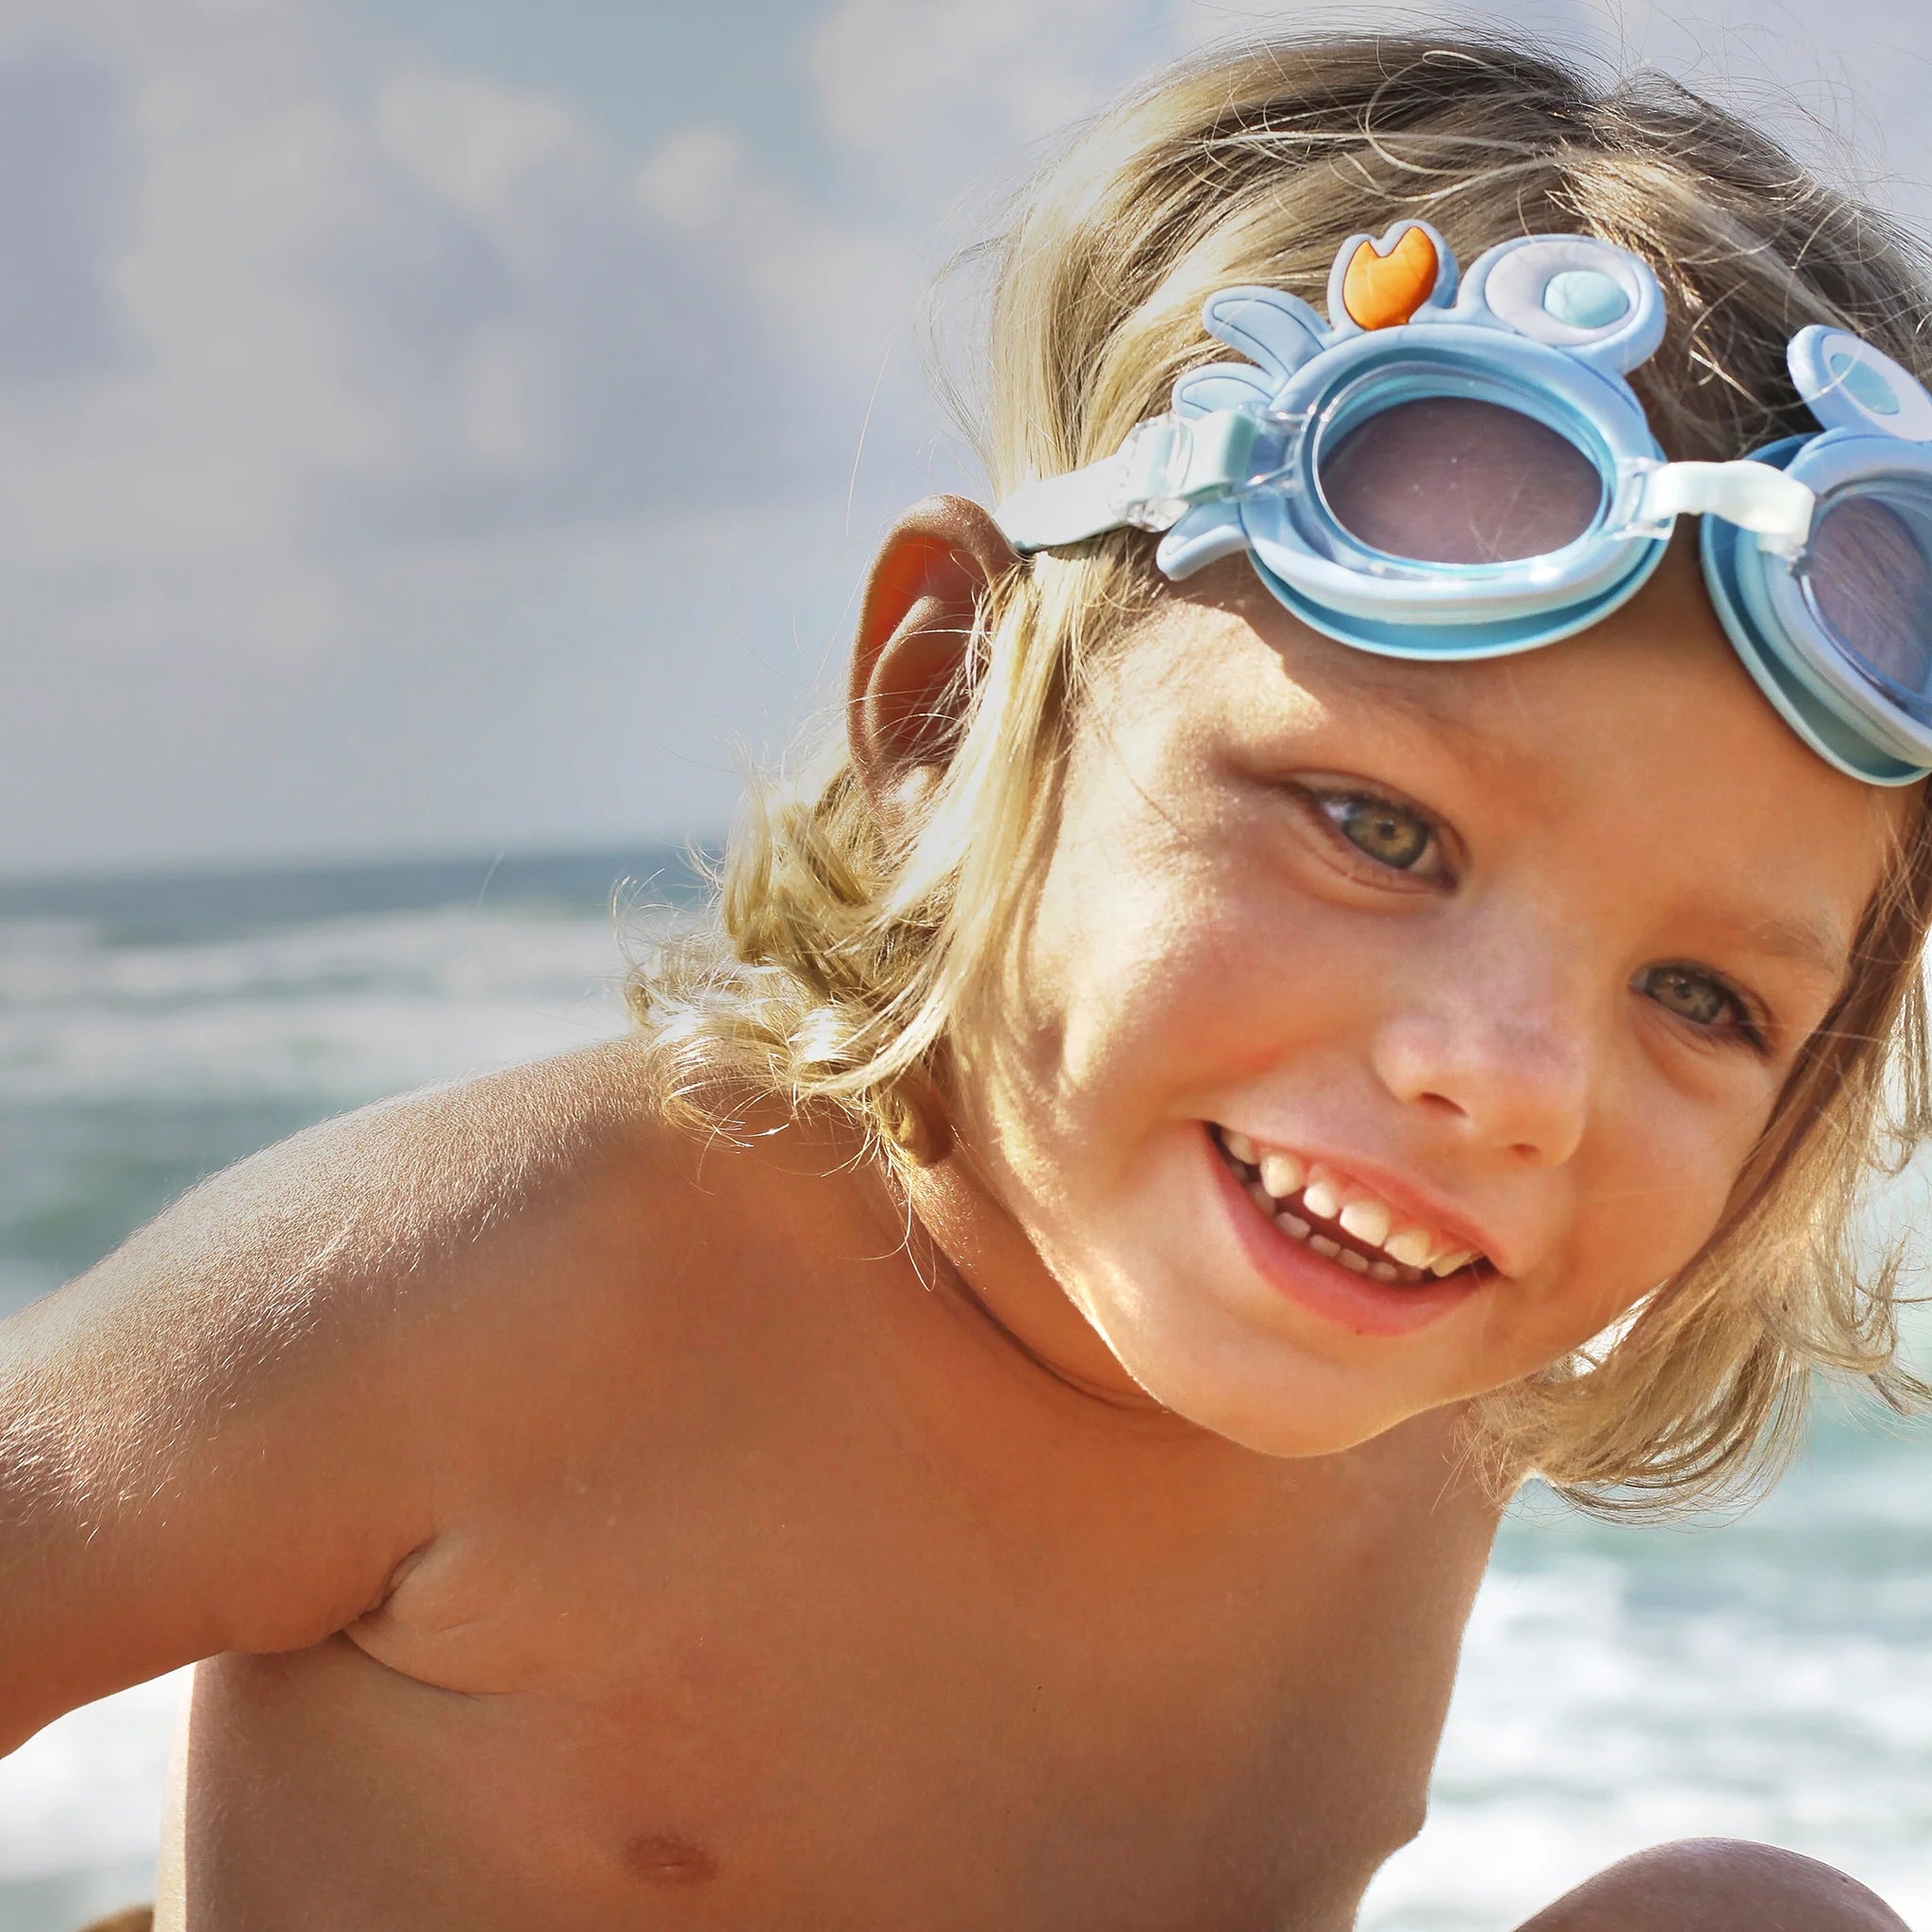 Sunnylife - Mini Swim Goggles - Sonny the Sea Creature Blue